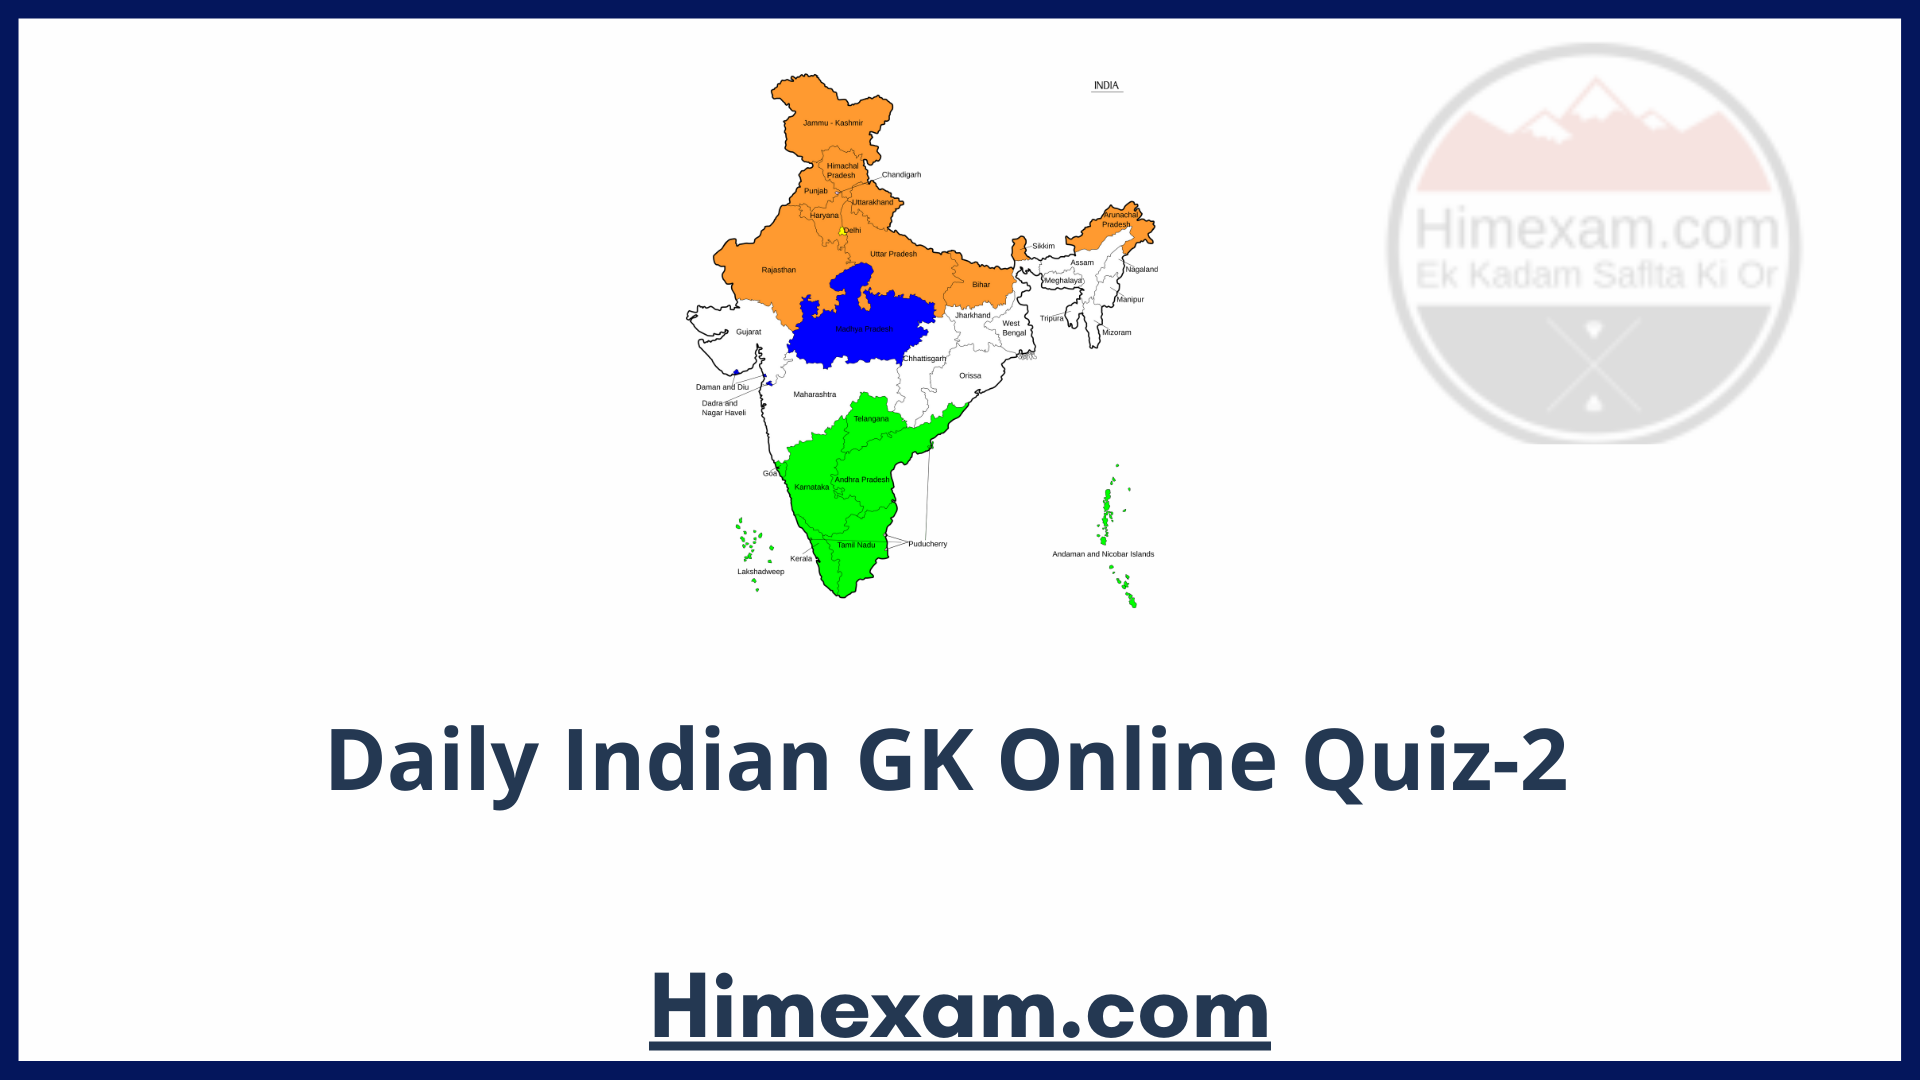 Daily Indian GK Online Quiz-2